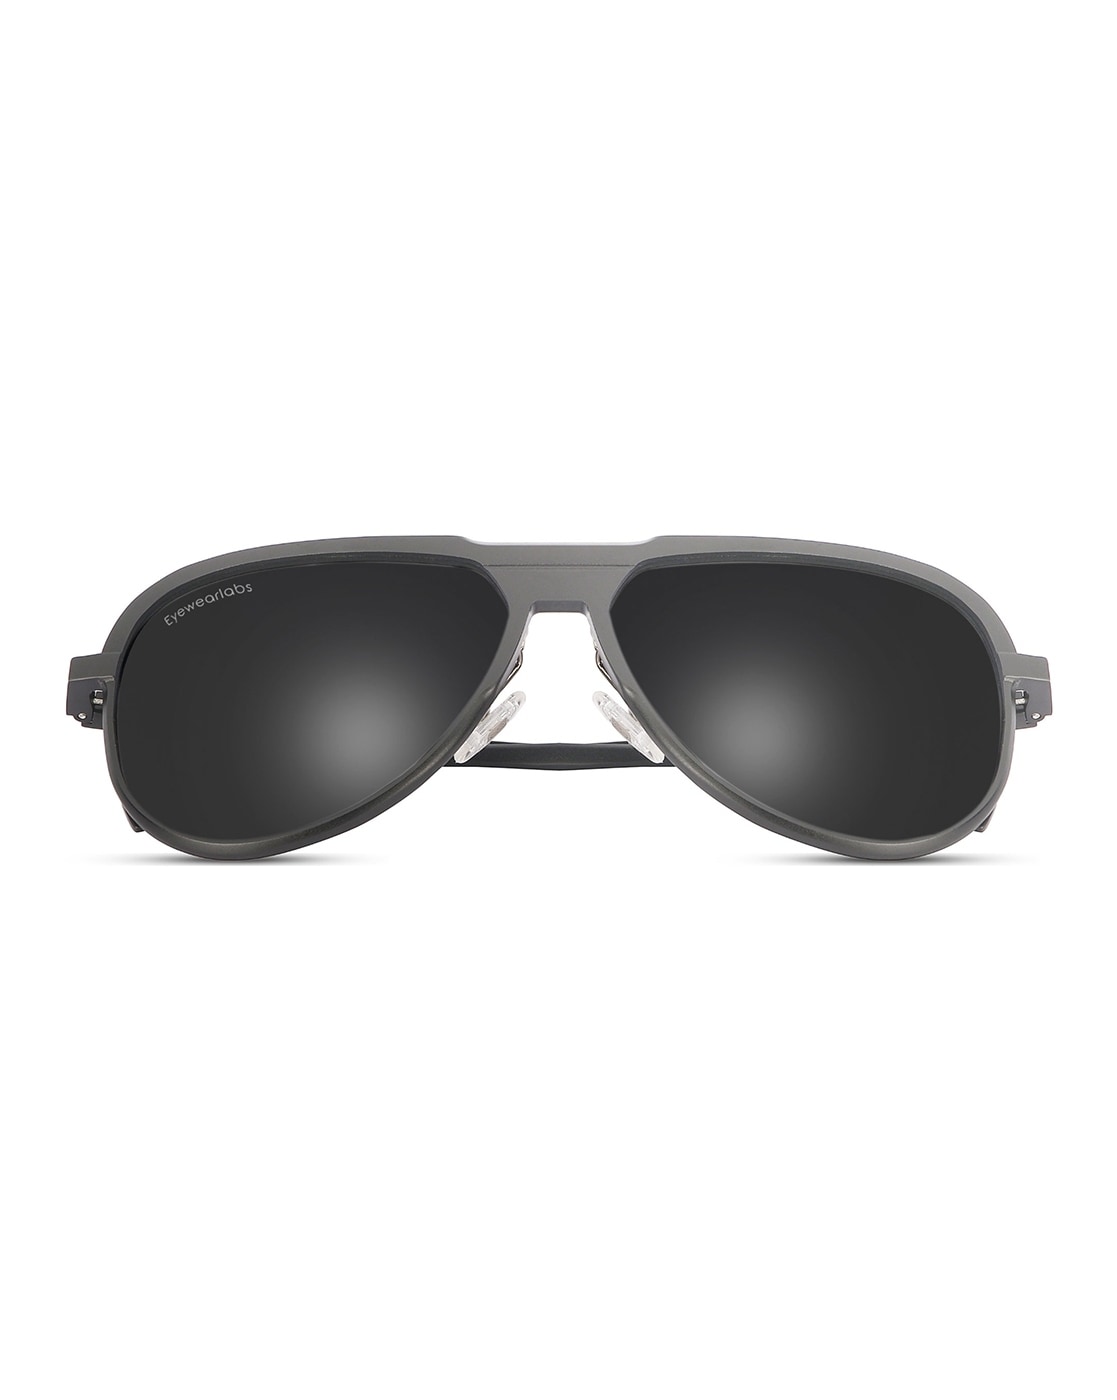 Top more than 150 black aviator sunglasses super hot